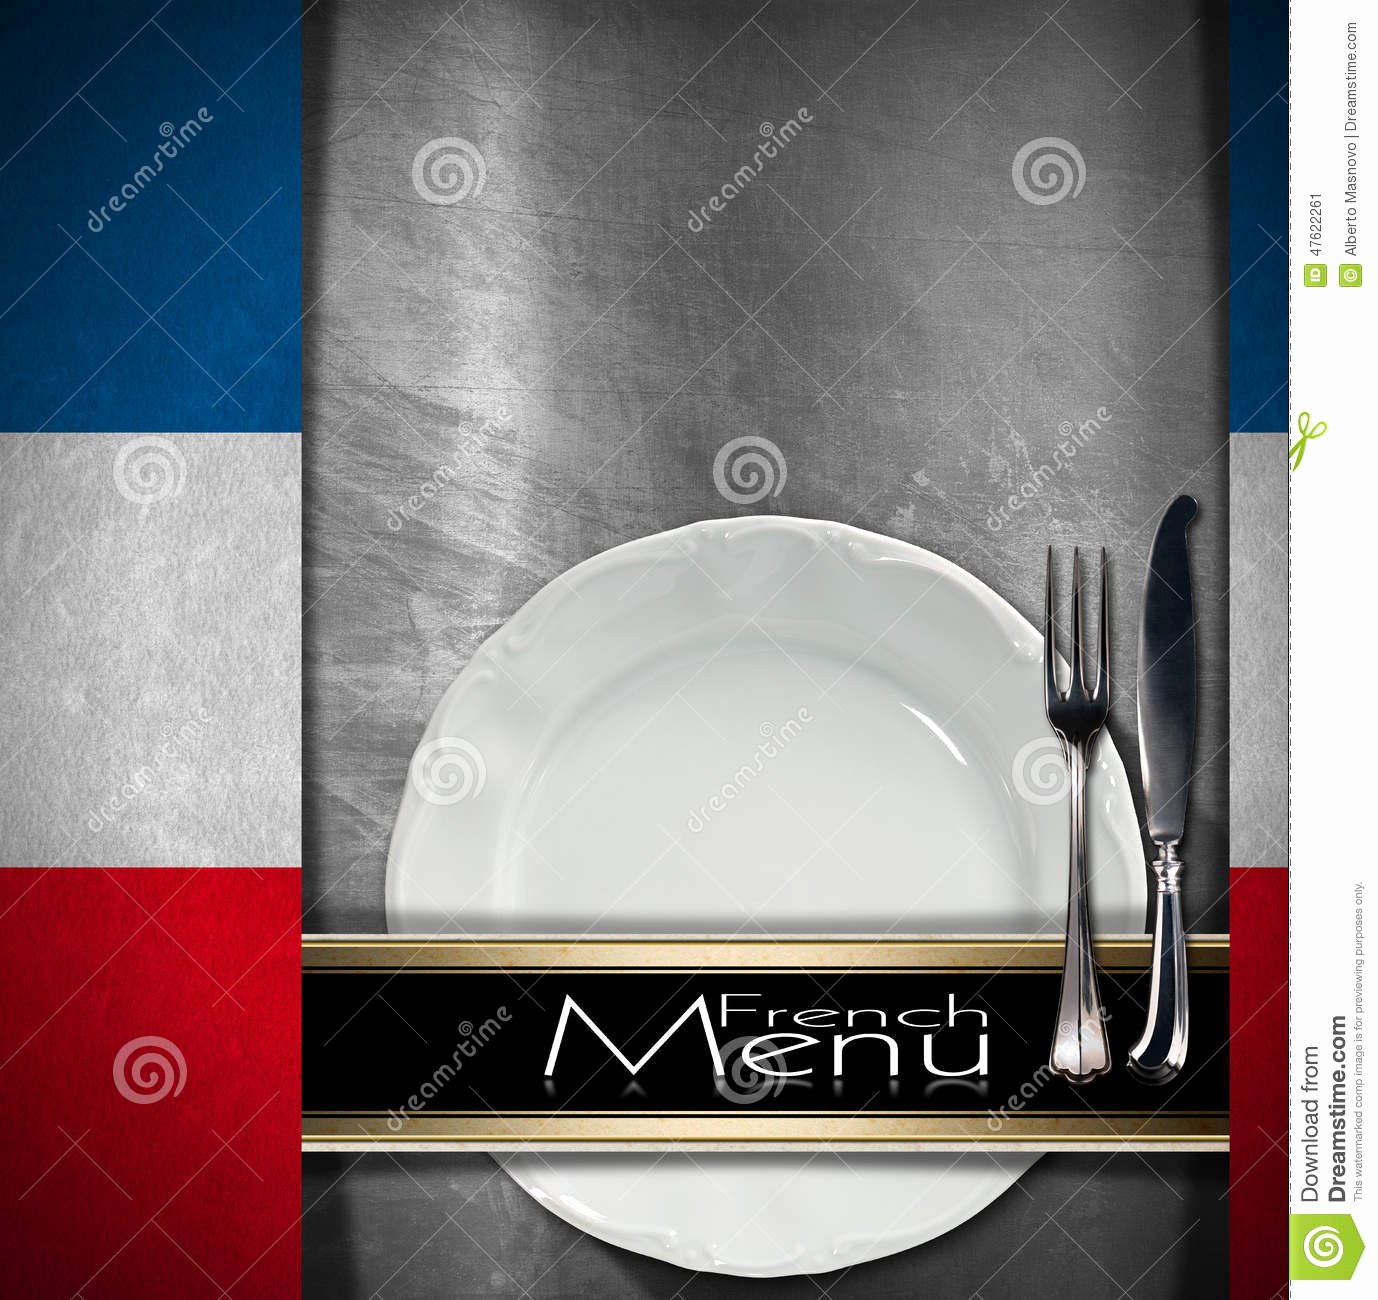 French Menu Design Luxury French Restaurant Menu Design Stock Illustration Image